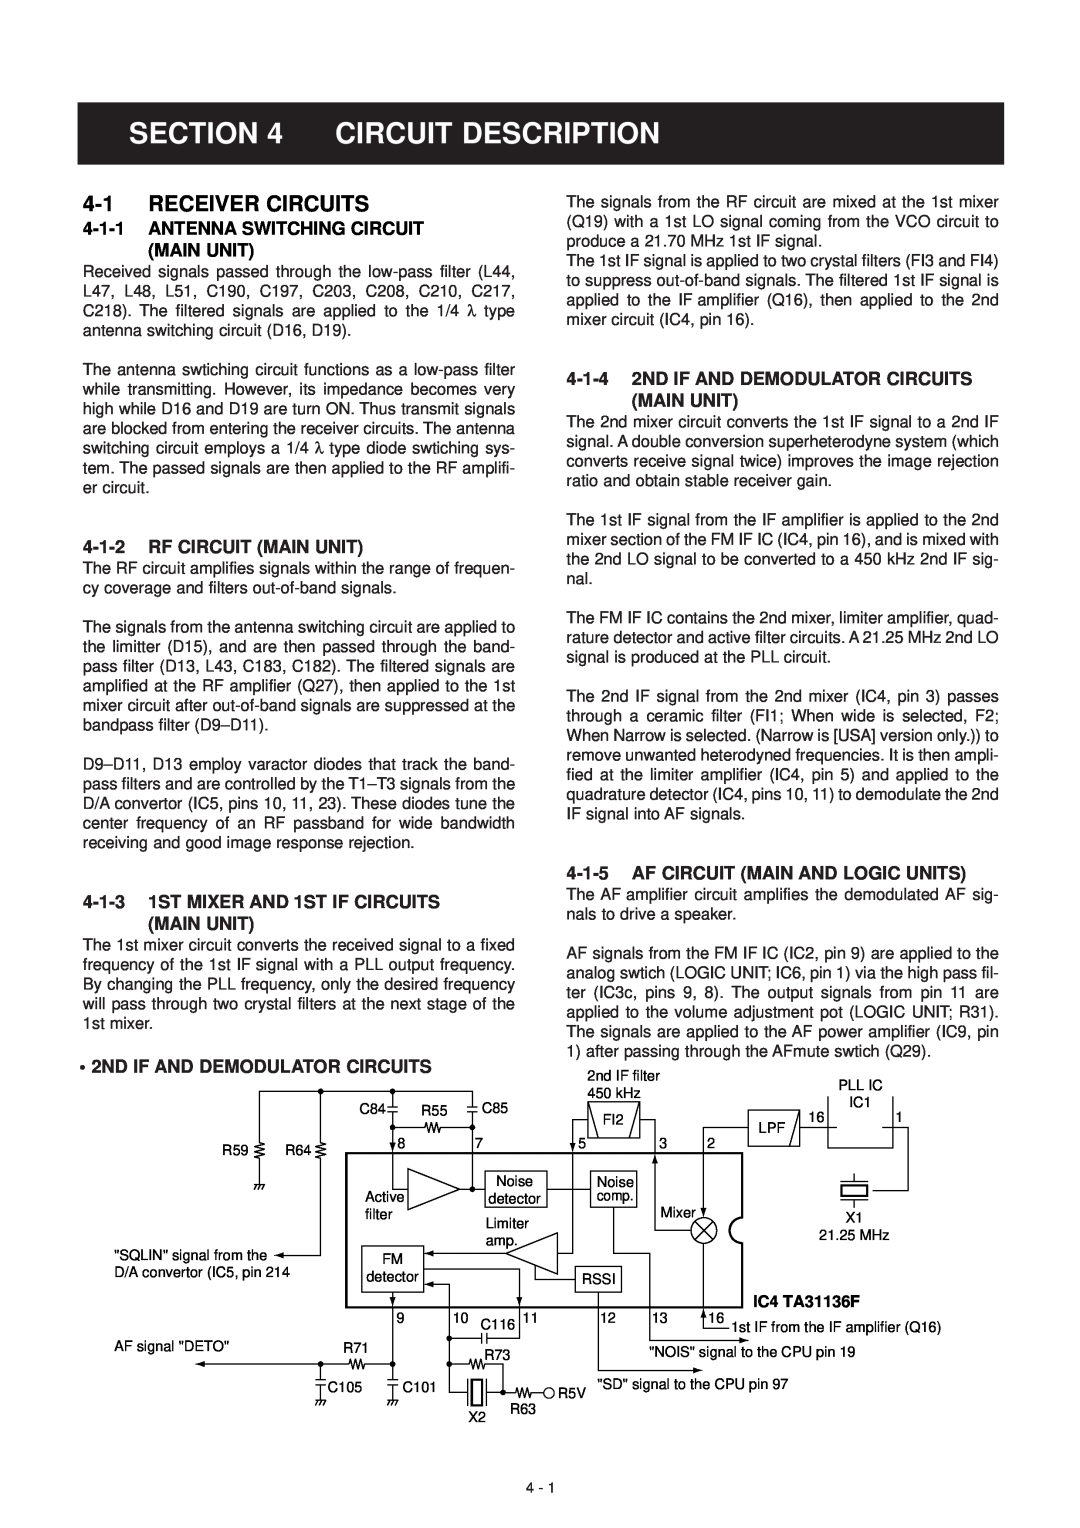 Polaroid IC-V8000 Circuit Description, 4-1RECEIVER CIRCUITS, 4-1-1ANTENNA SWITCHING CIRCUIT MAIN UNIT, Main Unit 